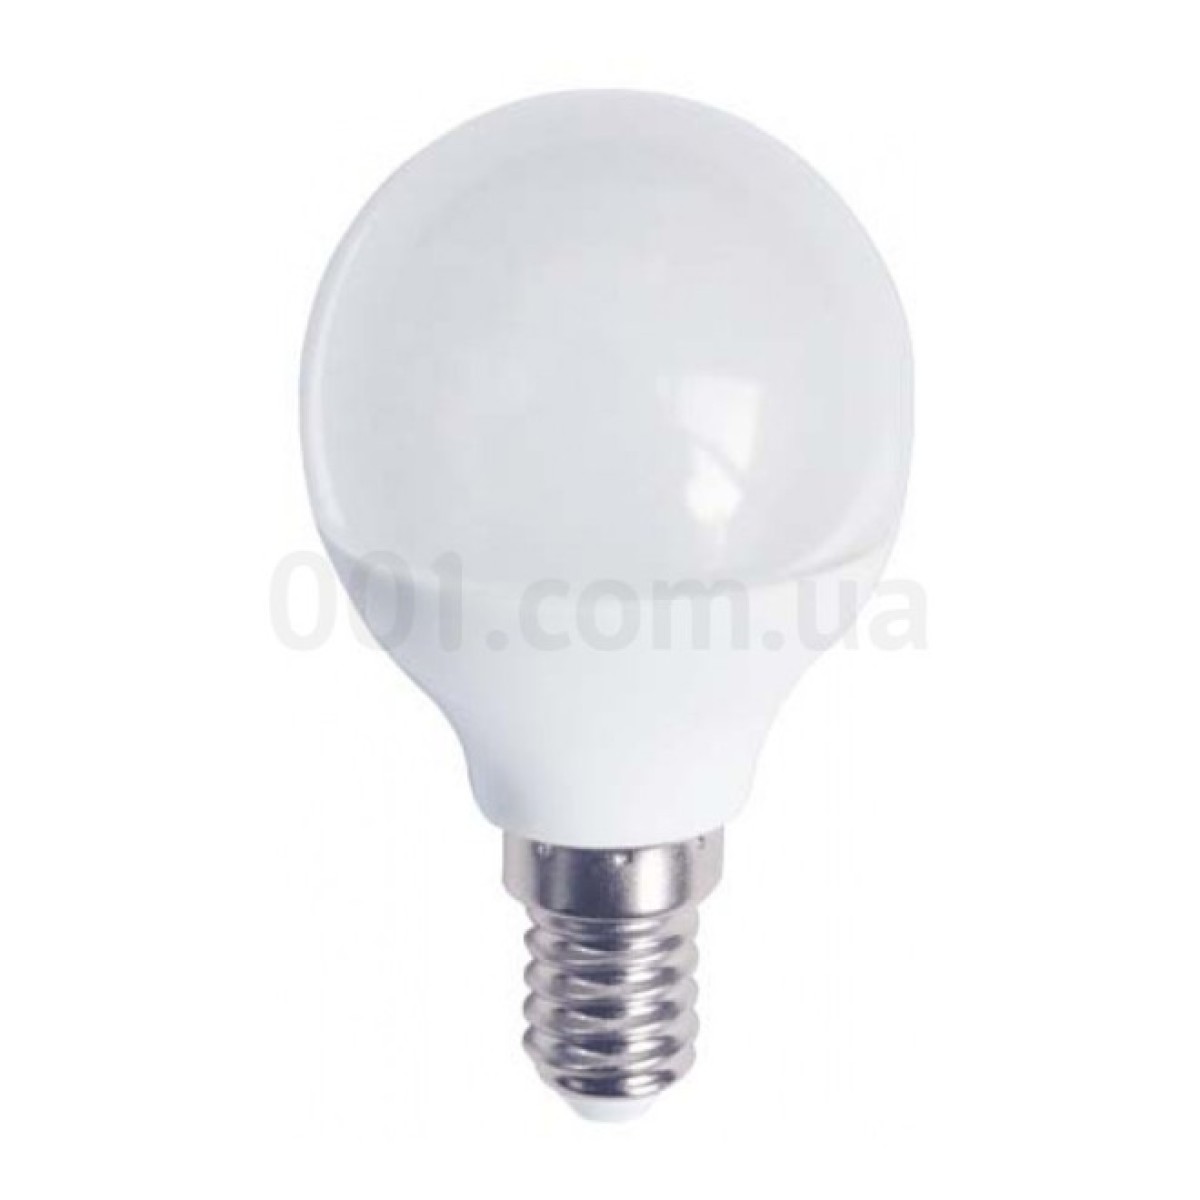 Светодиодная лампа LB-745 P45 (шар) 6Вт 4000K E14, Feron 98_98.jpg